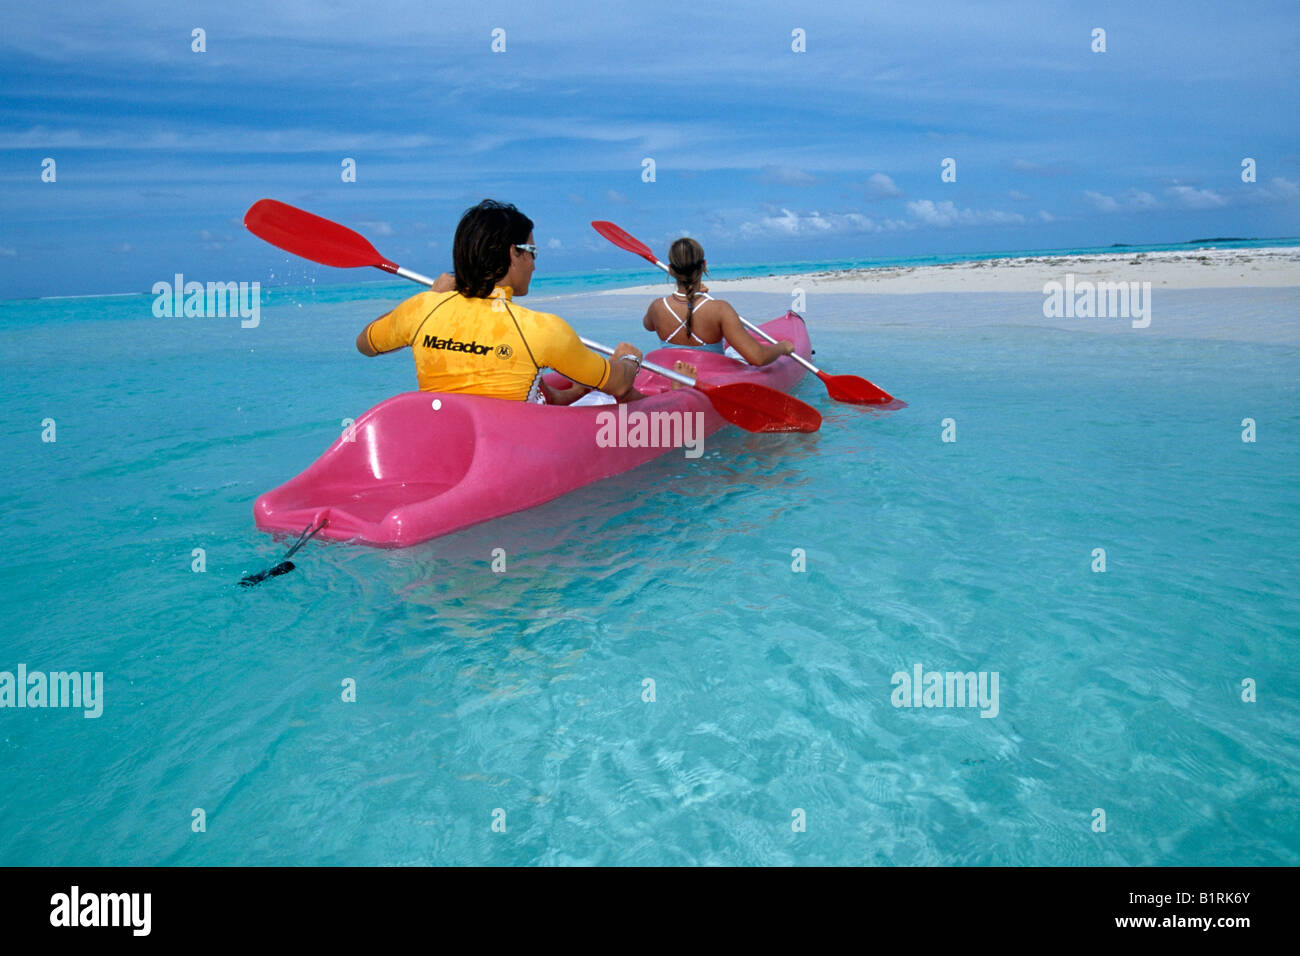 Kayak, Olhuveli, Atollo Sud, Maldive Foto Stock